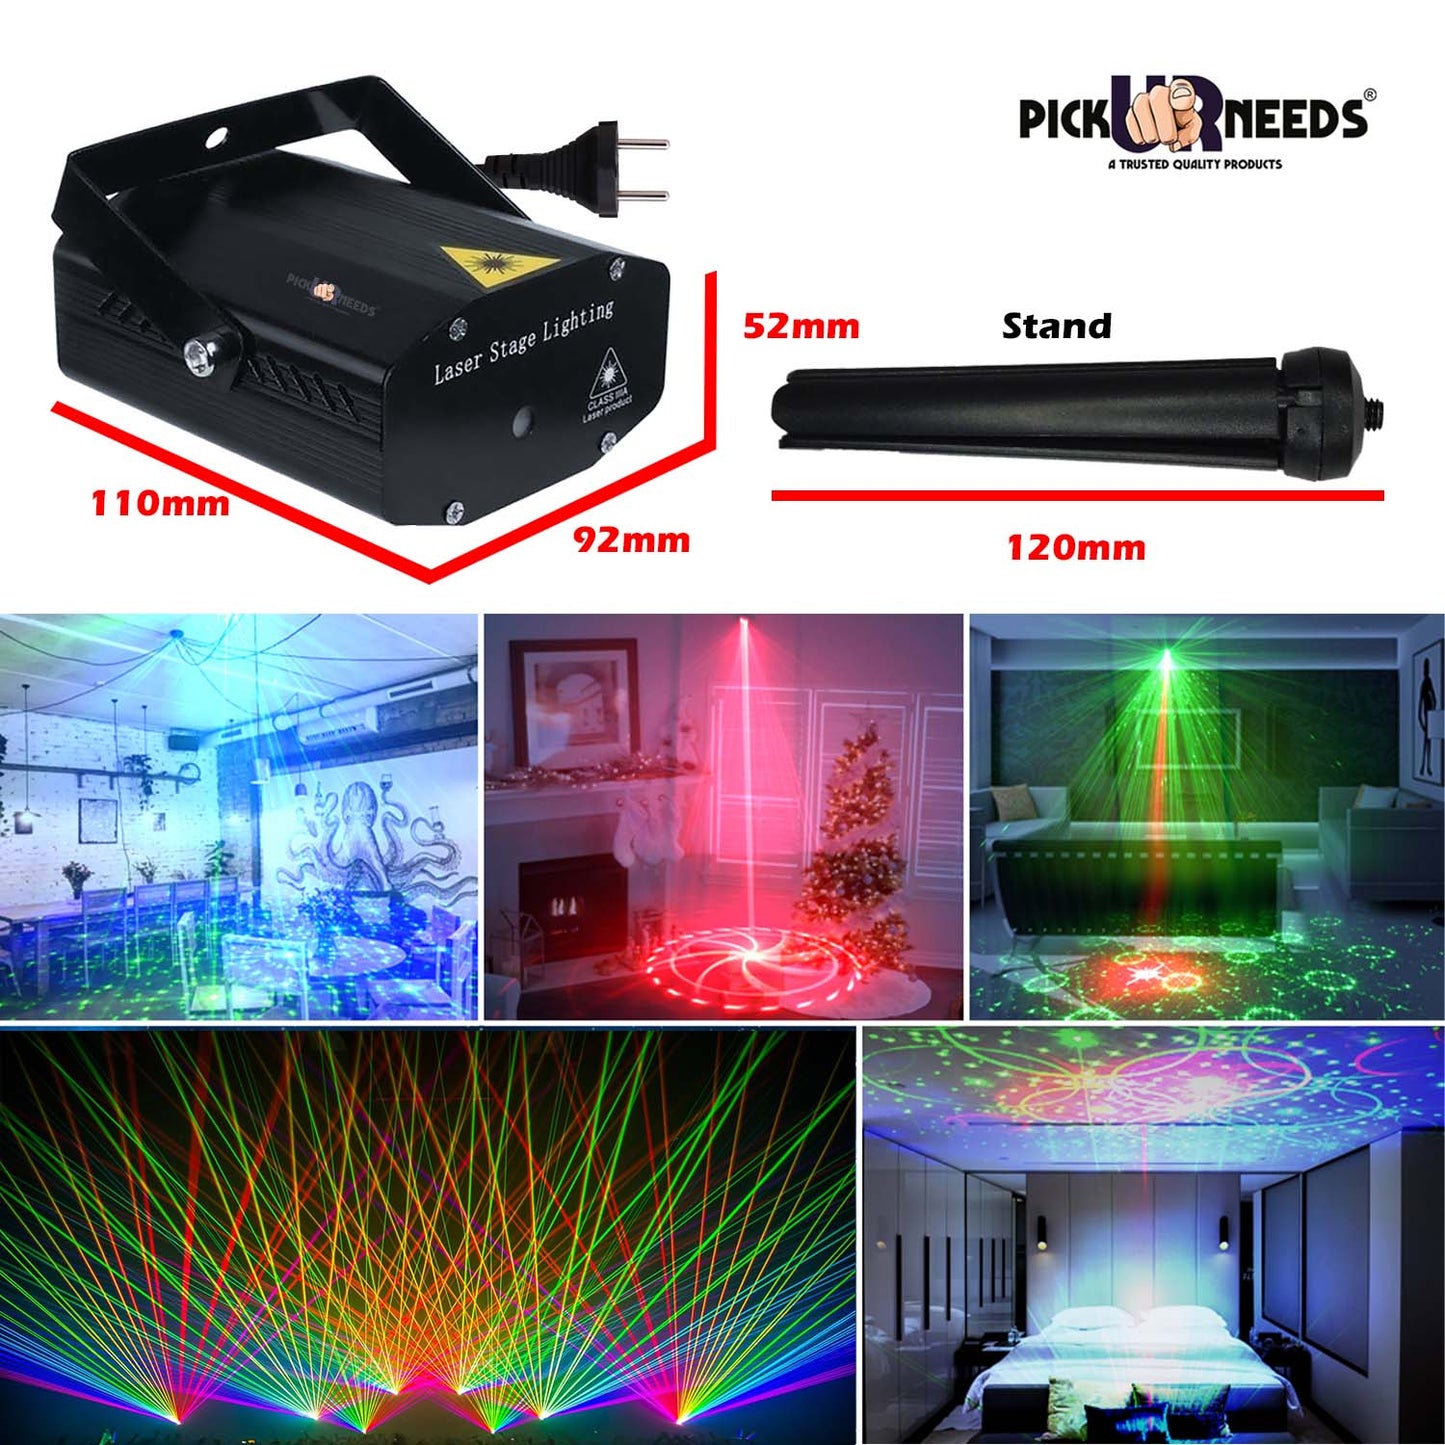 Pick Ur Needs Mini LED Dj Disco 12 Mode Combination, Stage Sound Activated Projector Shower Laser Light